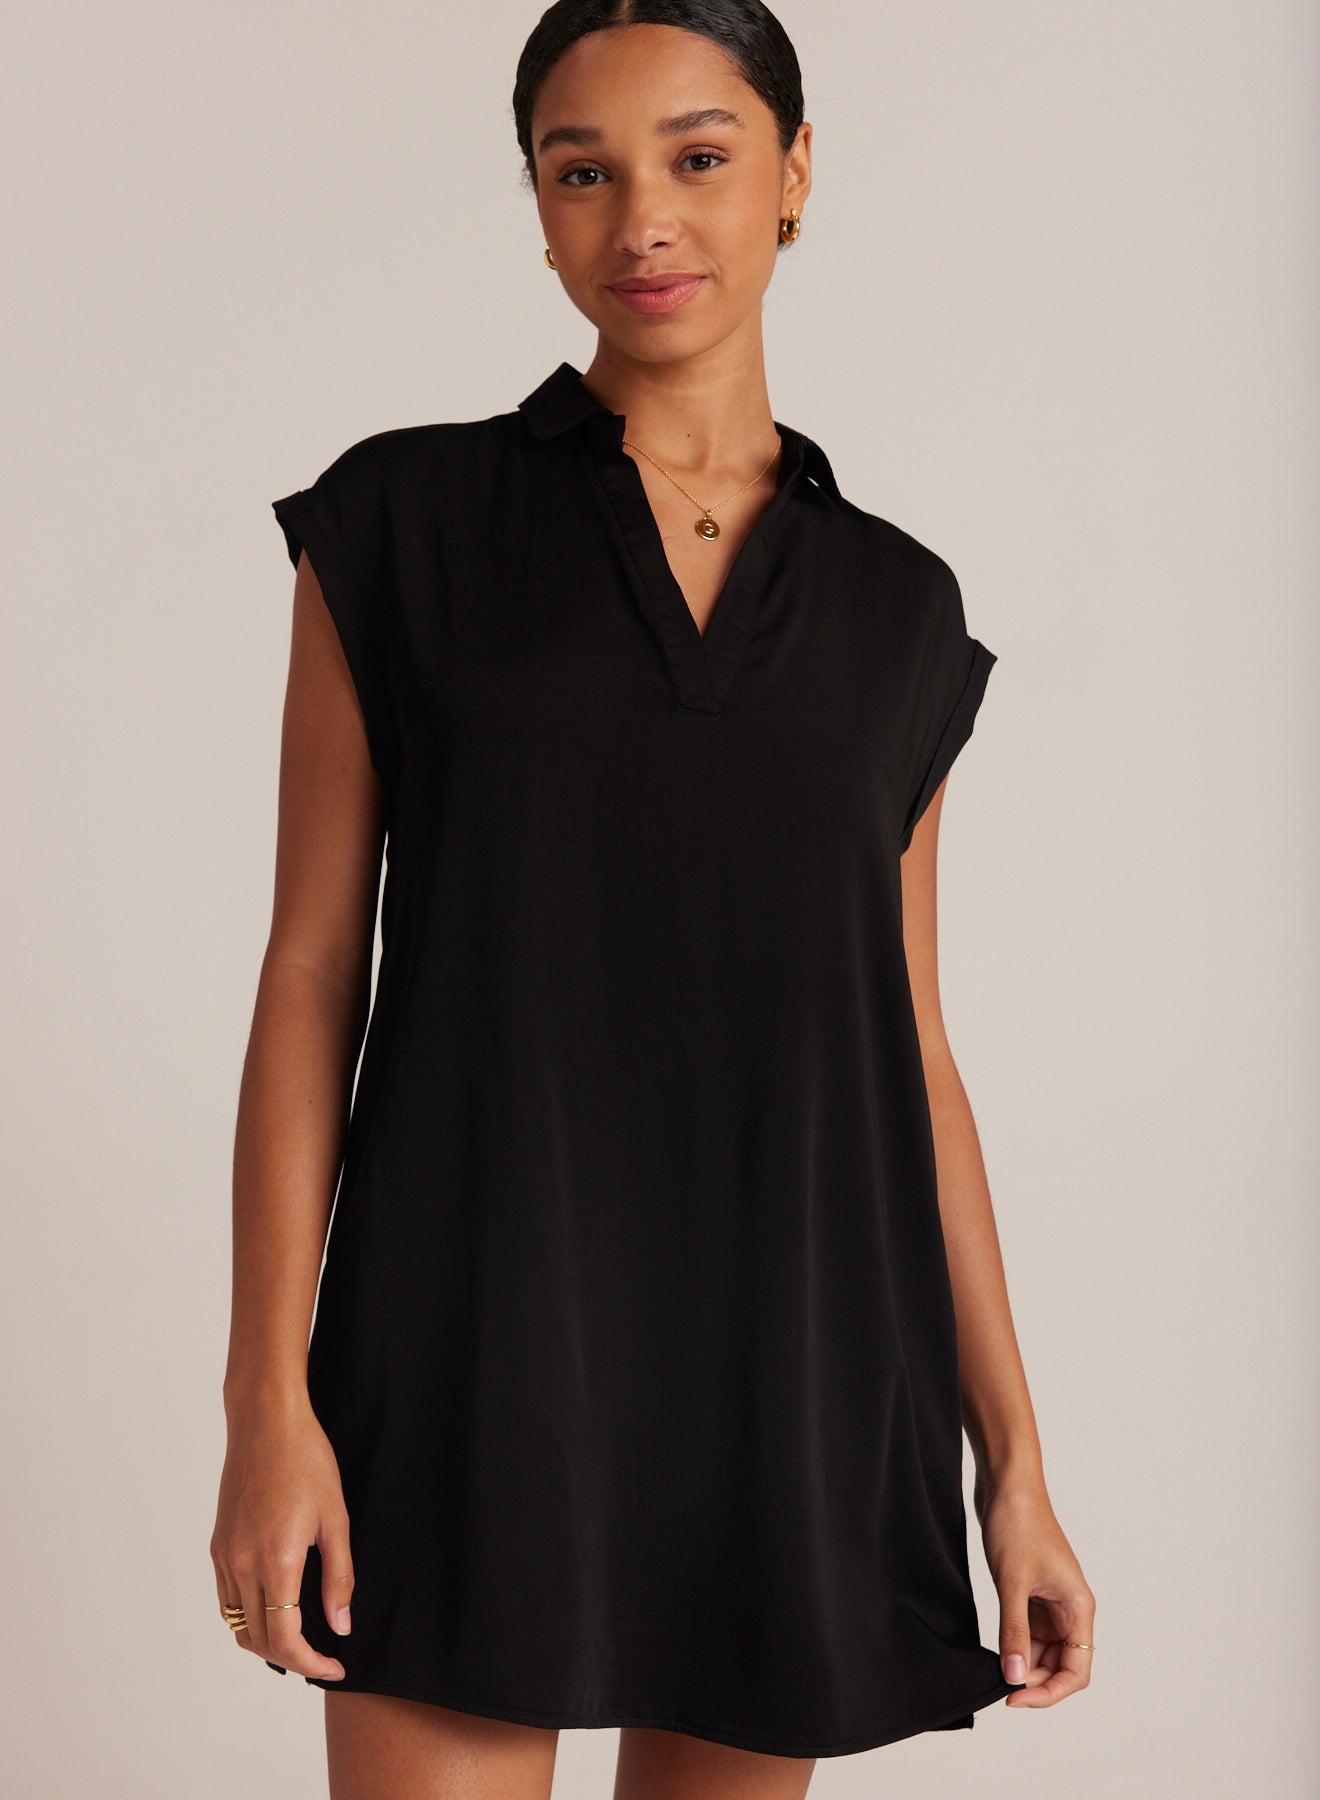 VALLFAL Women's Short Sleeve Maxi T Shirt Dress Padding Bra